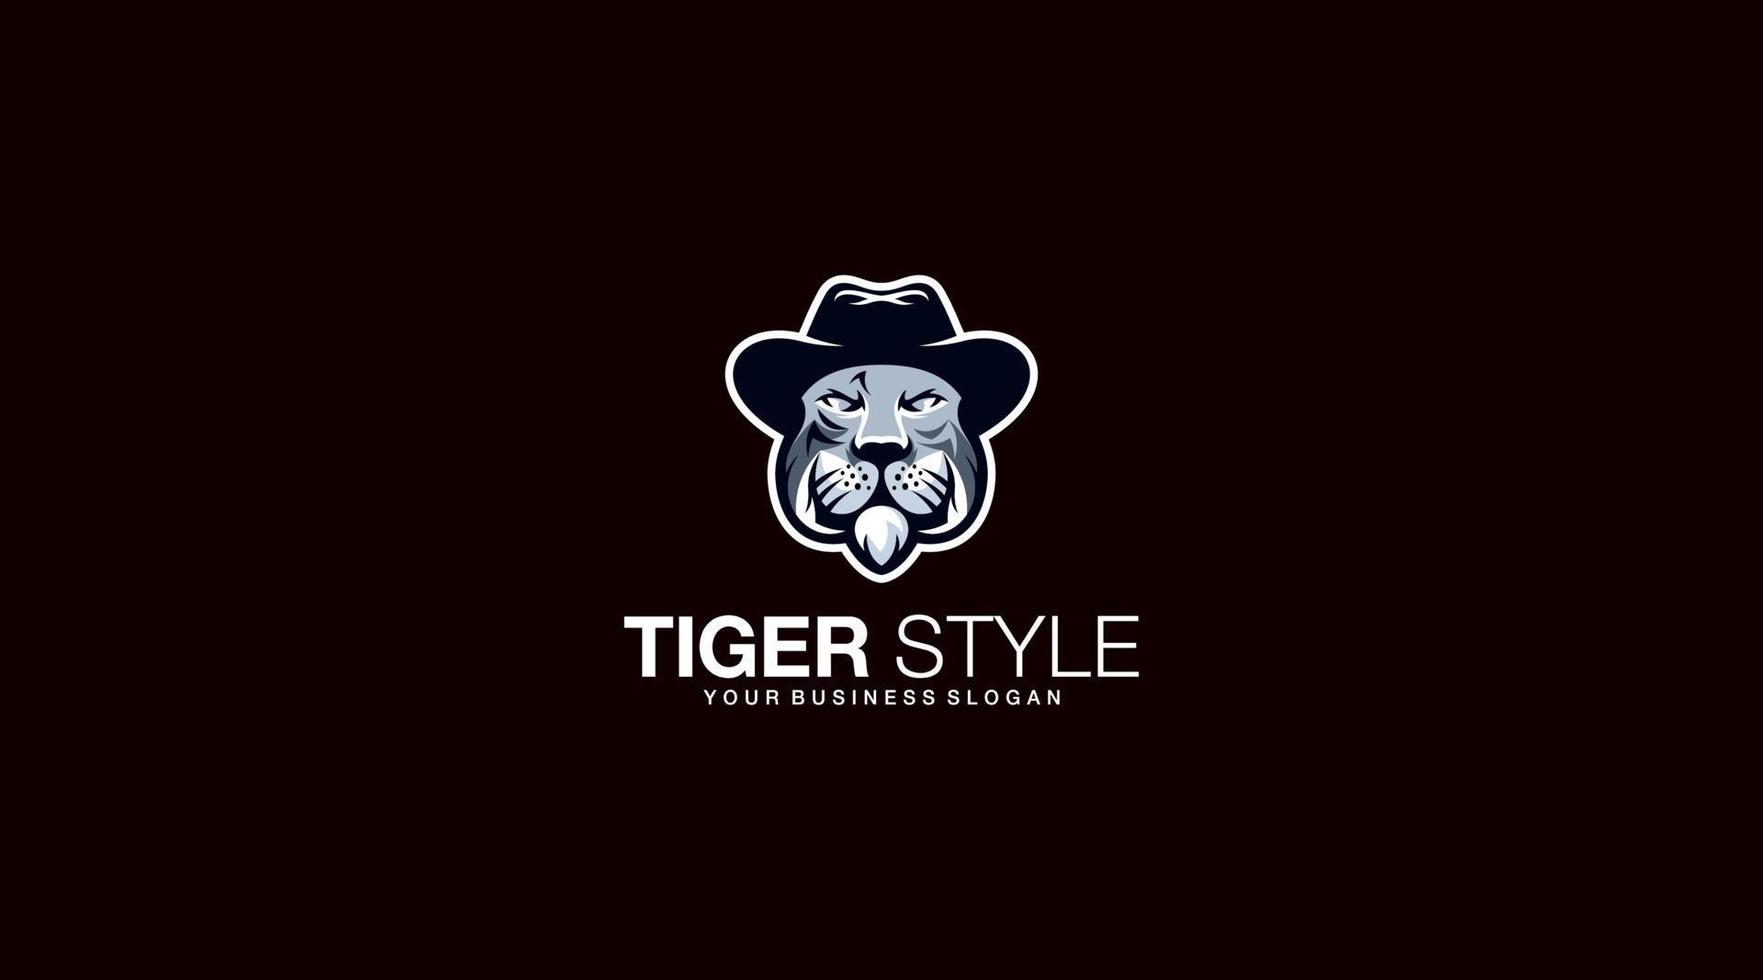 Tiger style vector logo design illustration